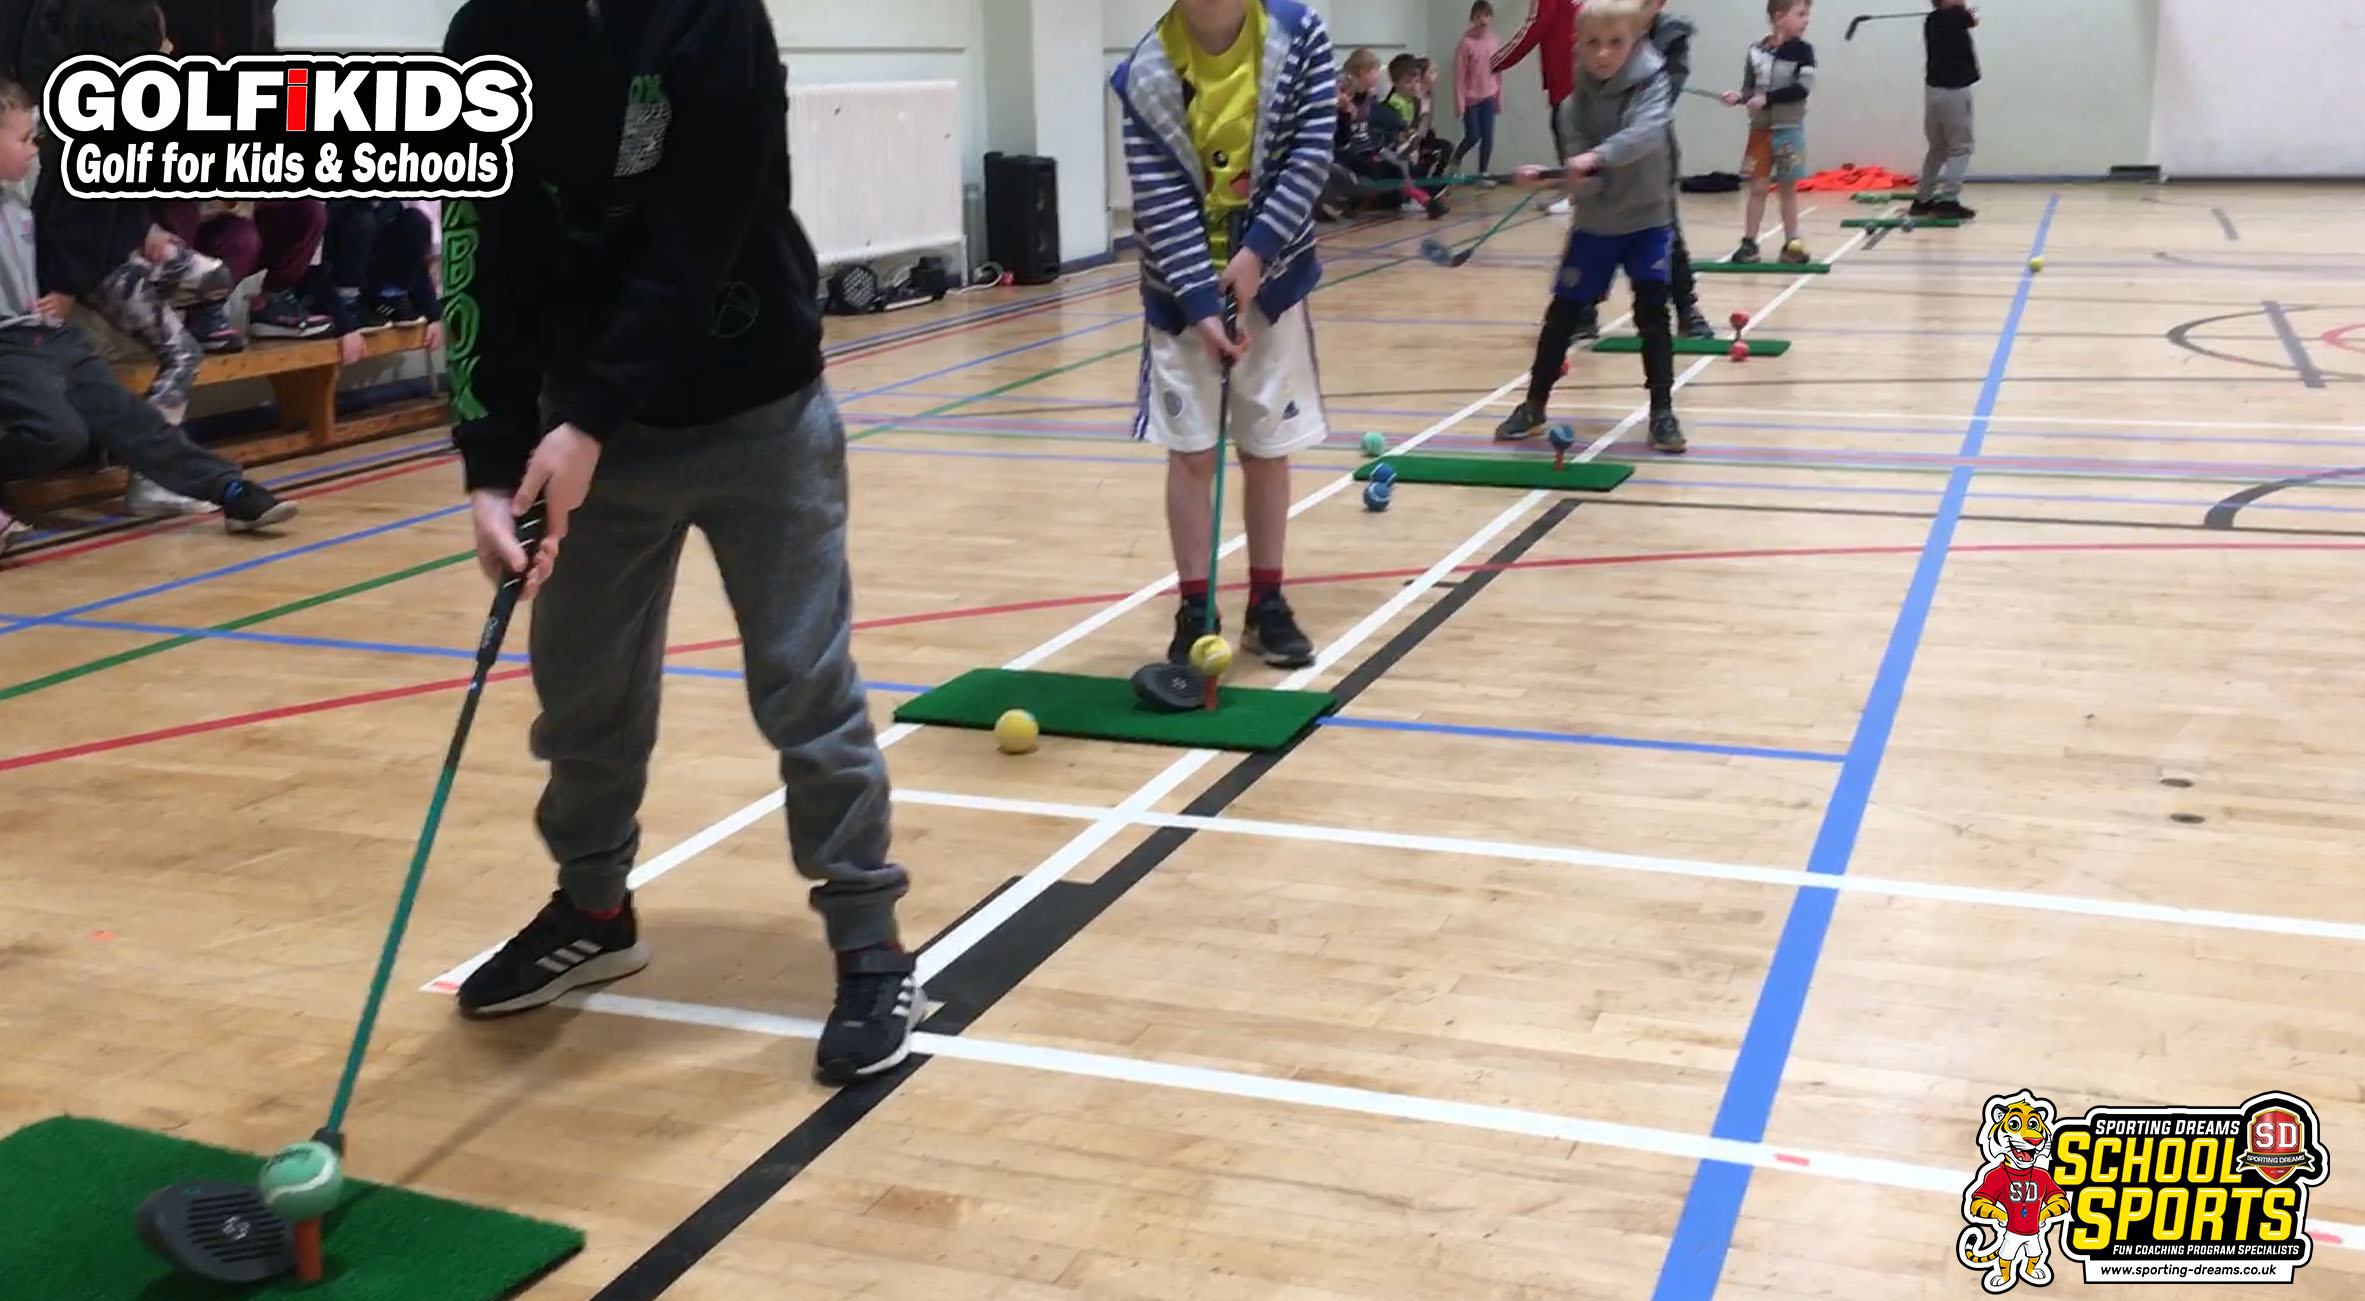 Golfikids: Golf lessons for schools